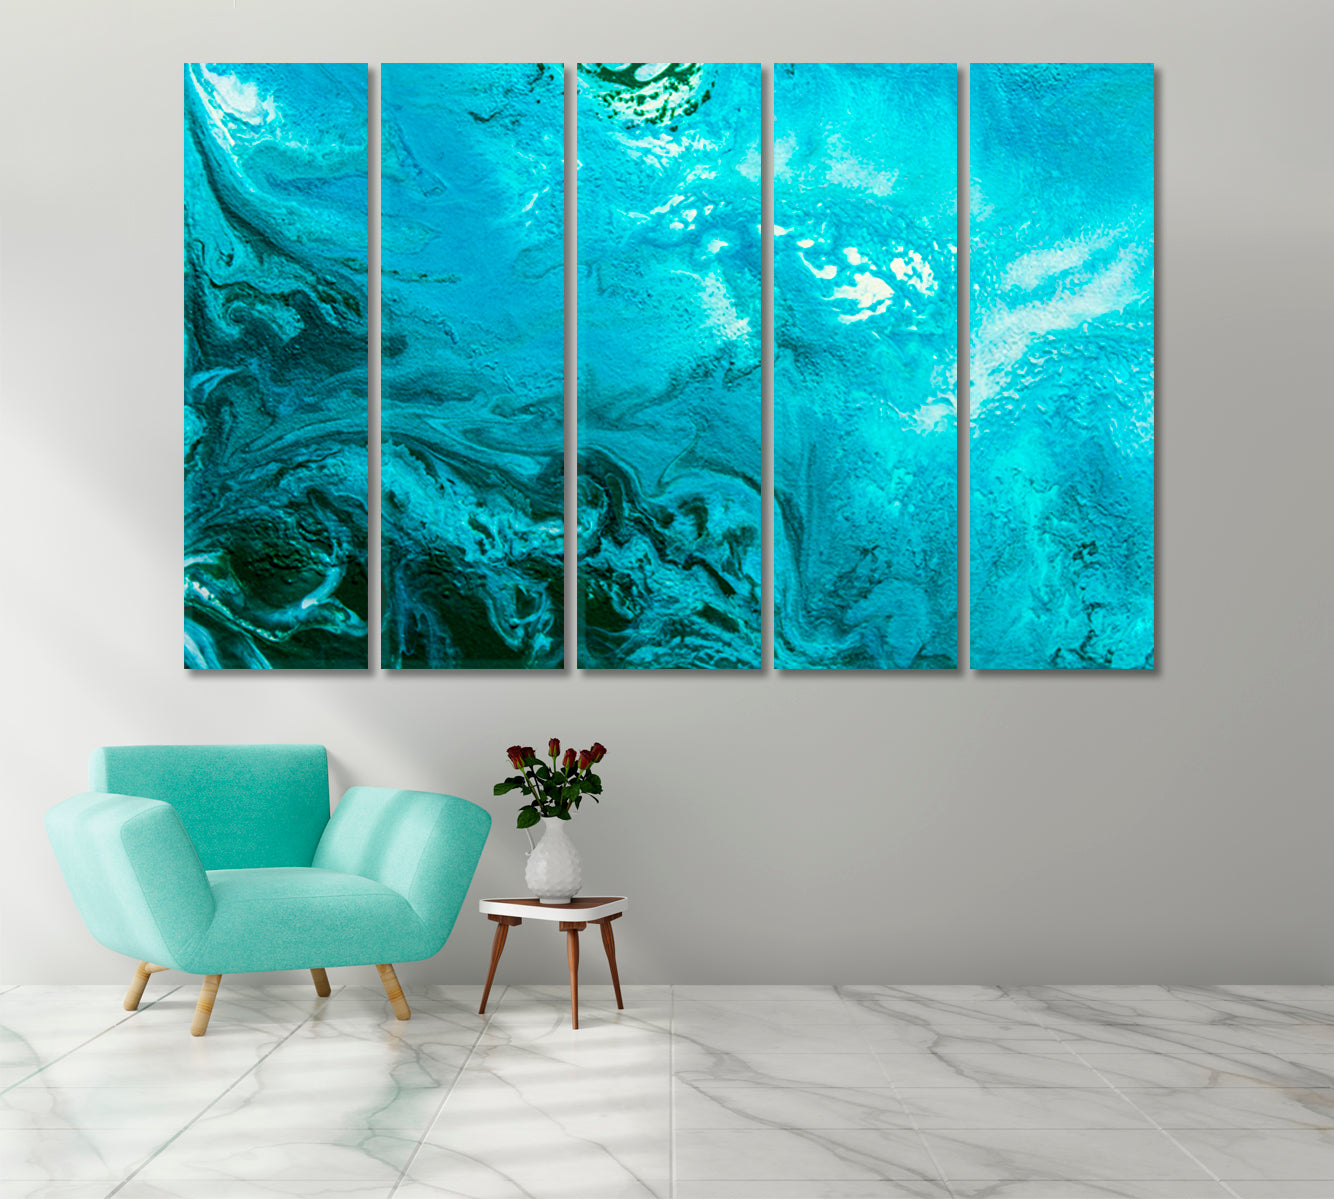 Abstract Imitation of Sea Waves Canvas Print-Canvas Print-CetArt-5 Panels-36x24 inches-CetArt